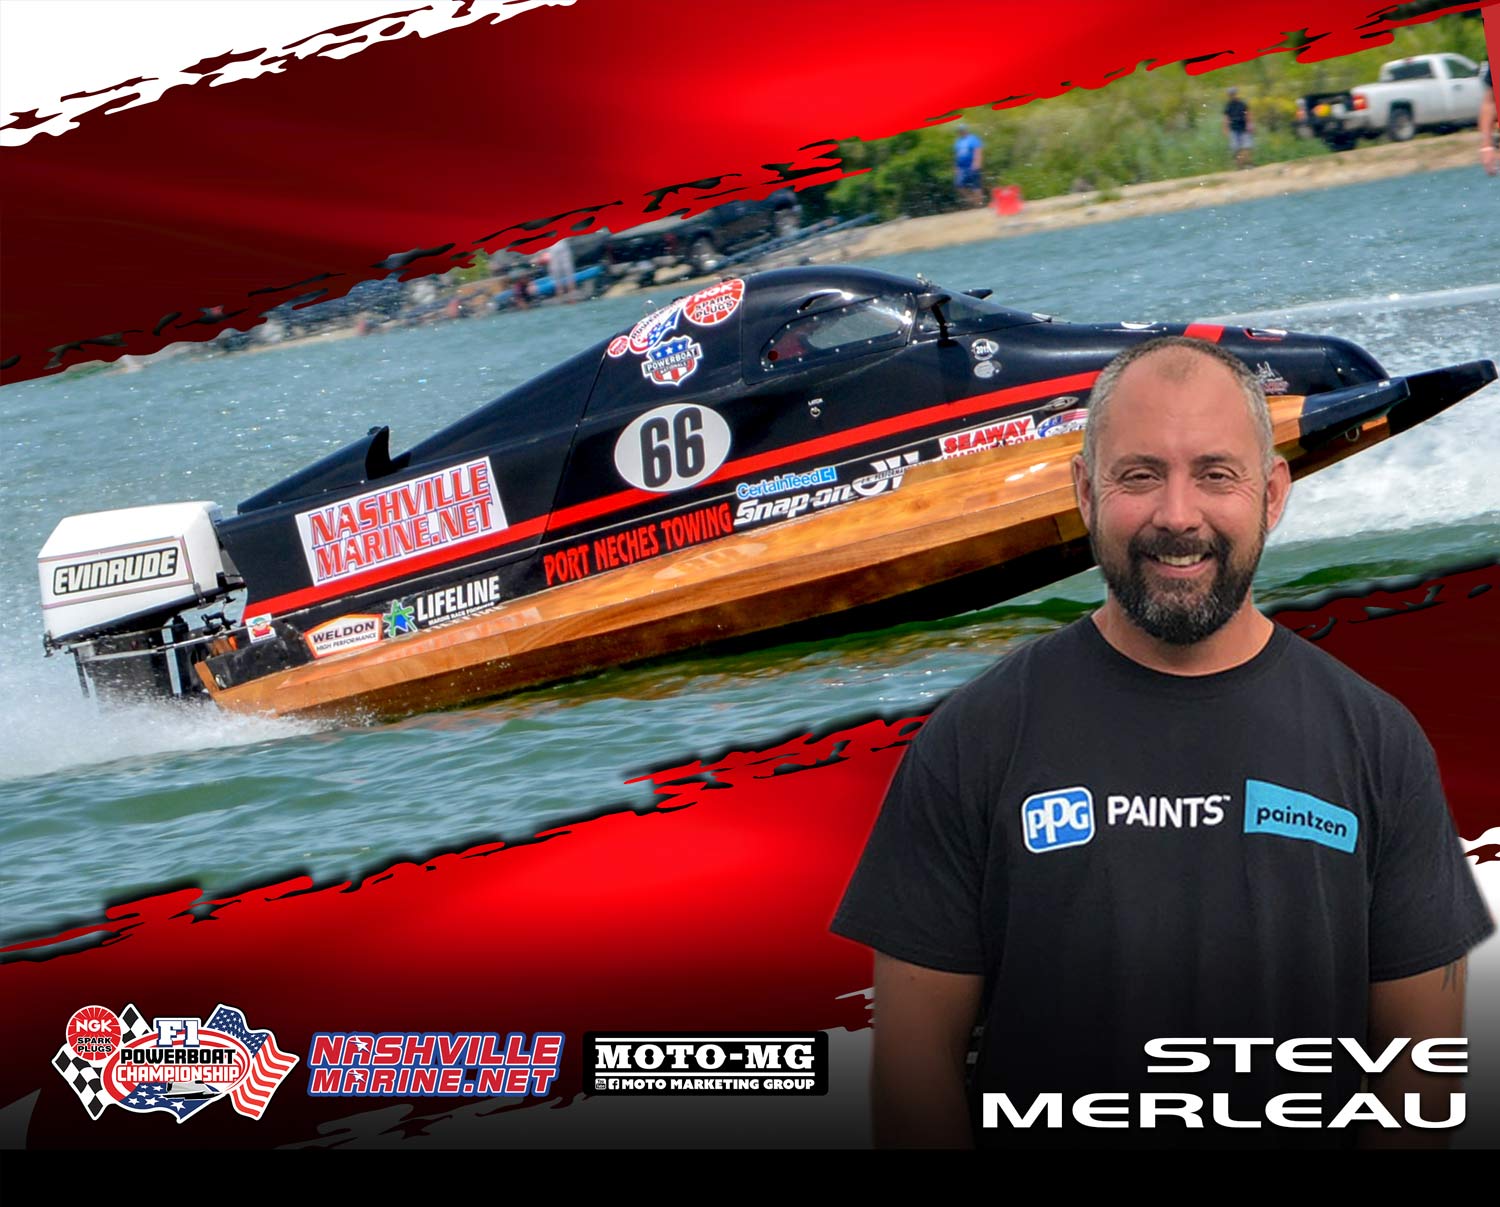 Nashville-Marine-McMurray-Racing-Formula-One-Boat-Racing-Driver-Steve-Merleau-66